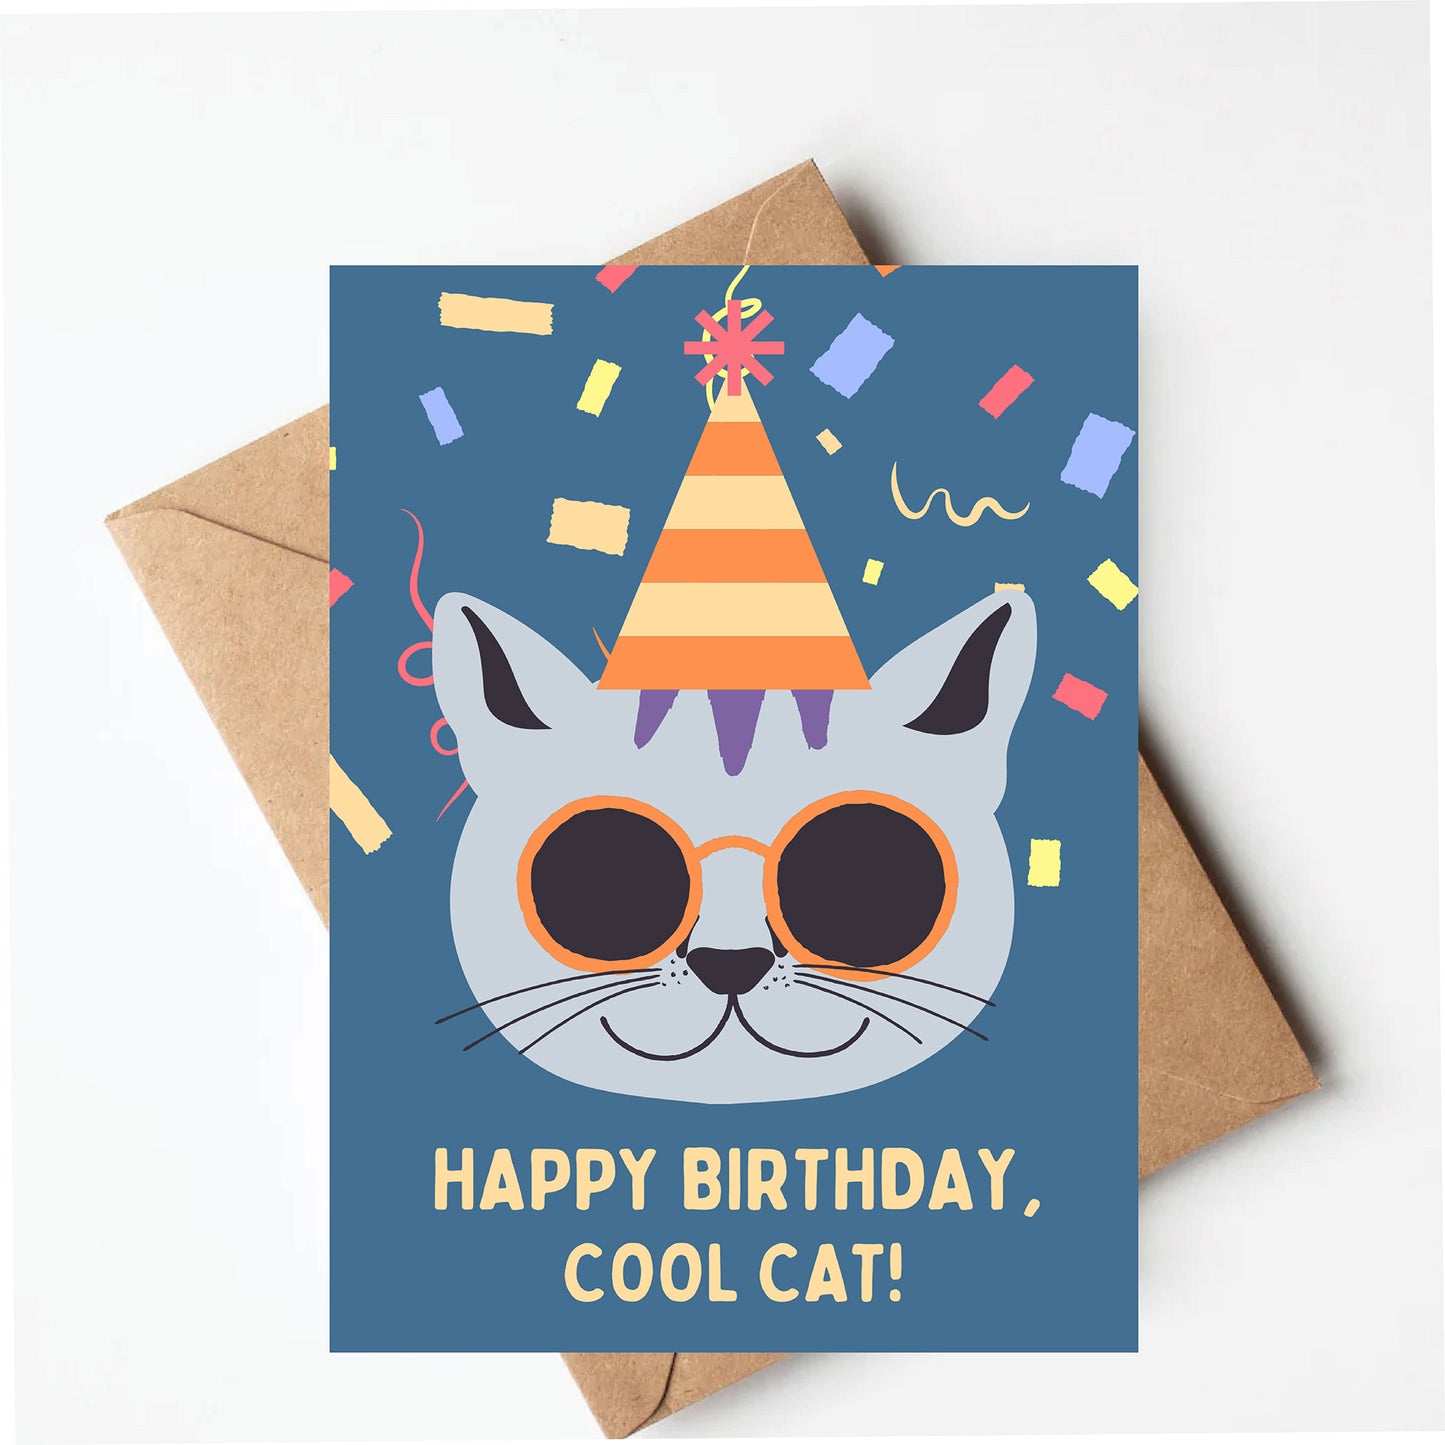 Cool cat birthday card